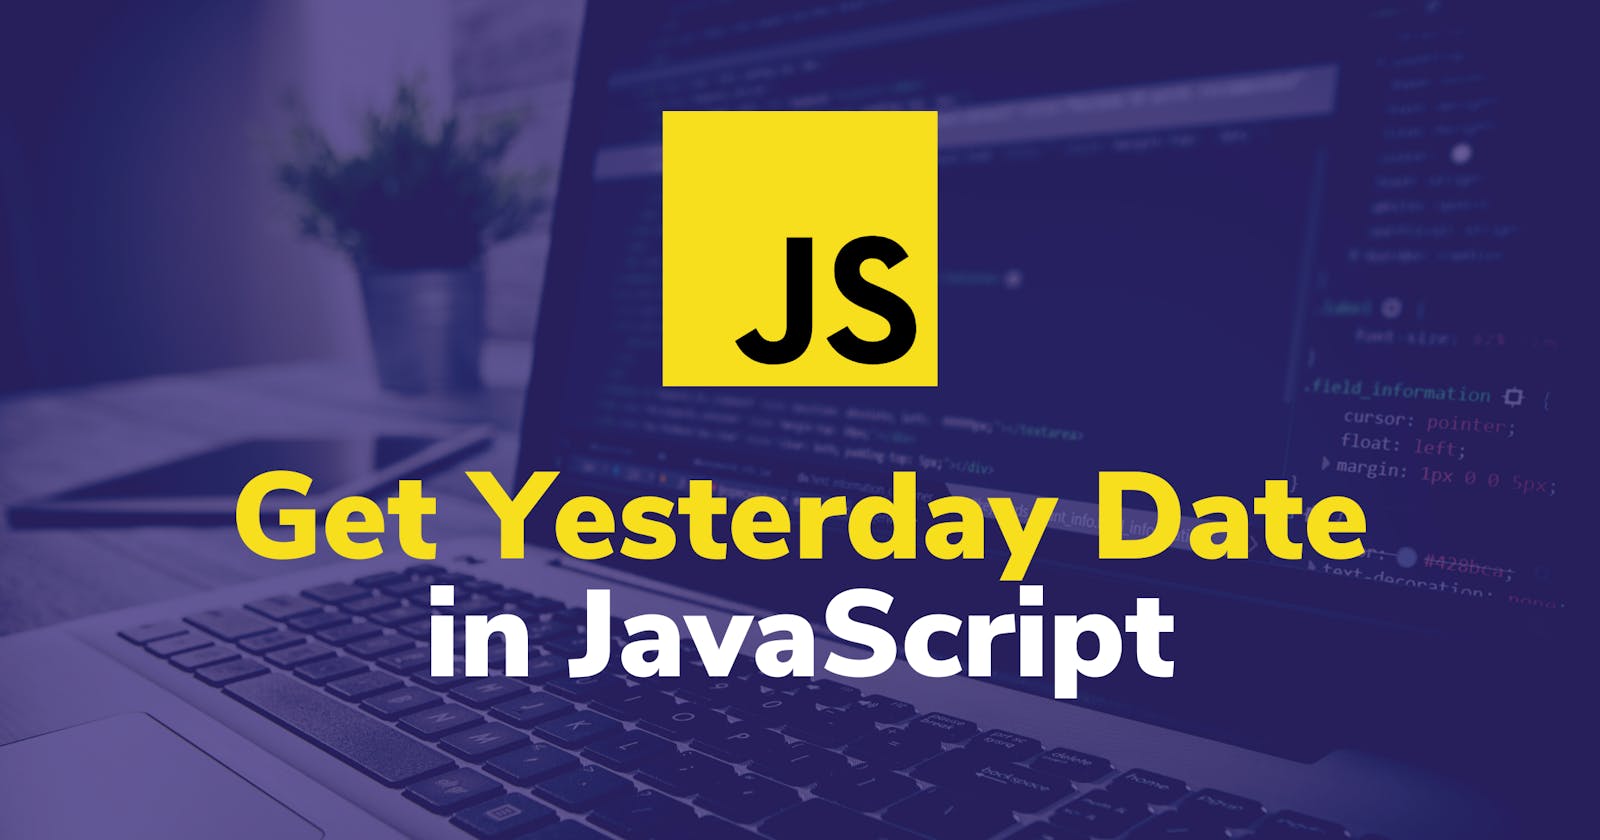 Get Yesterday Date in JavaScript